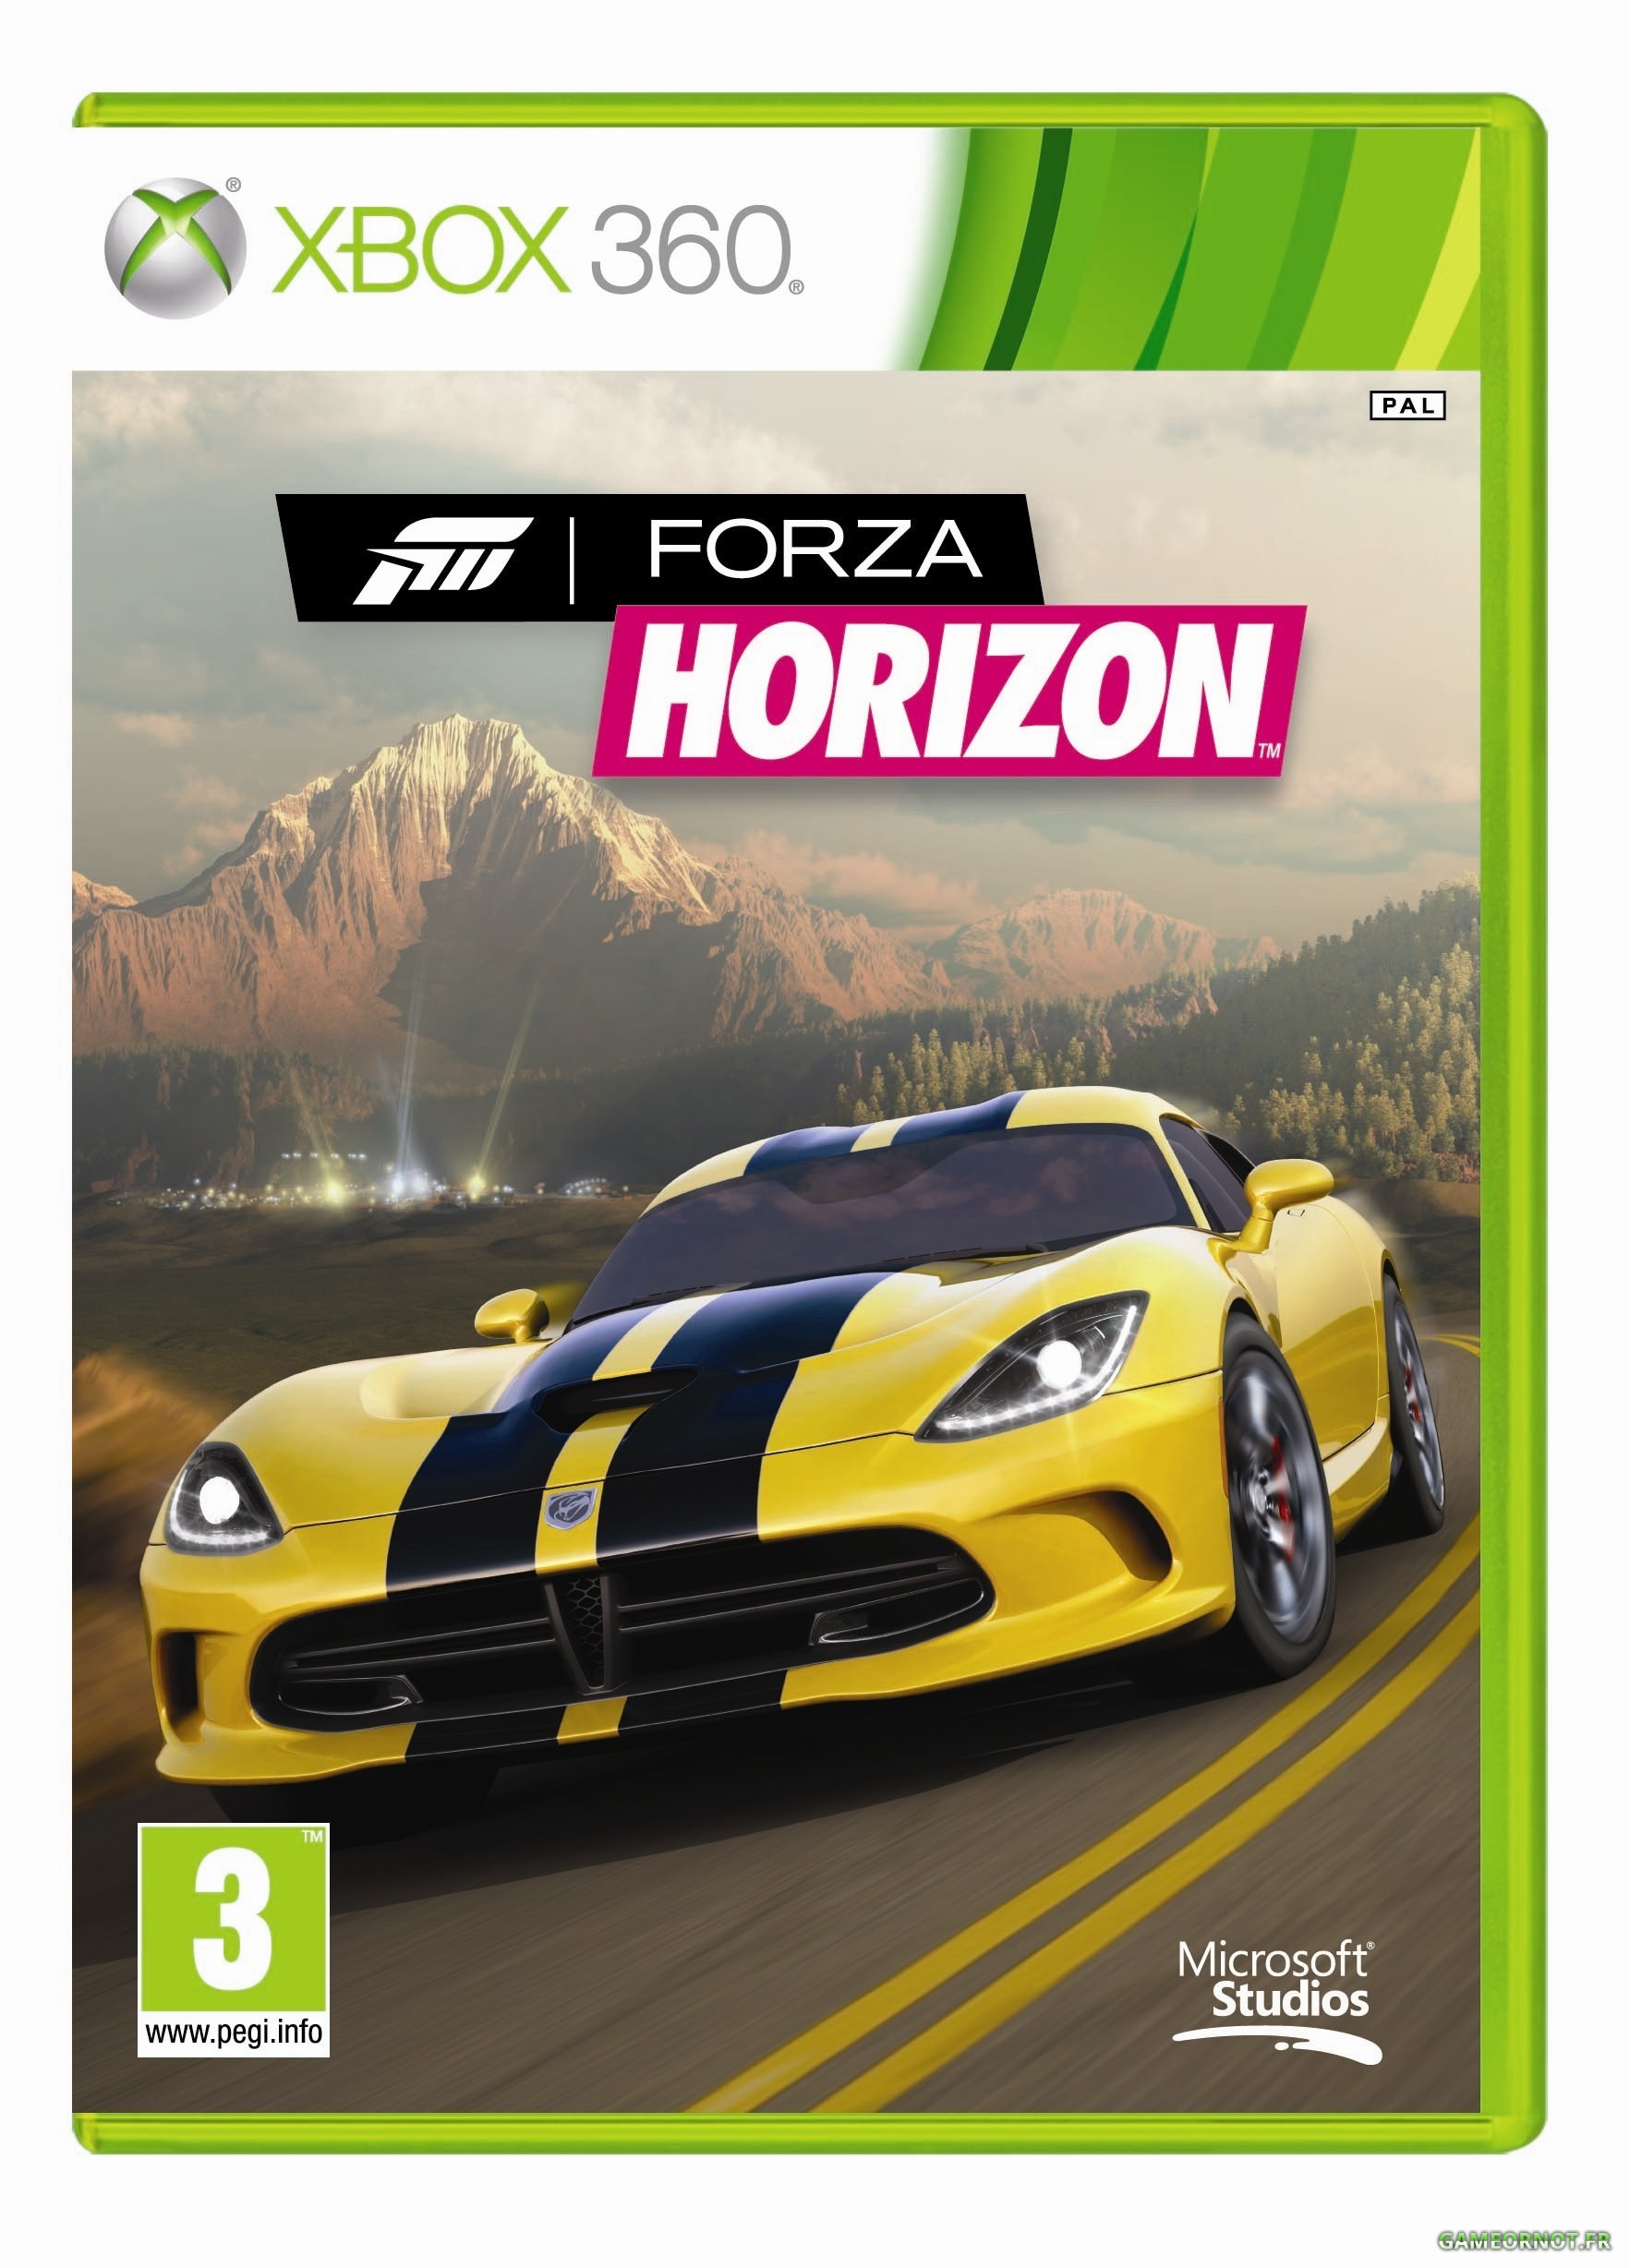 Forza Horizon - Road Trip à 300km/h